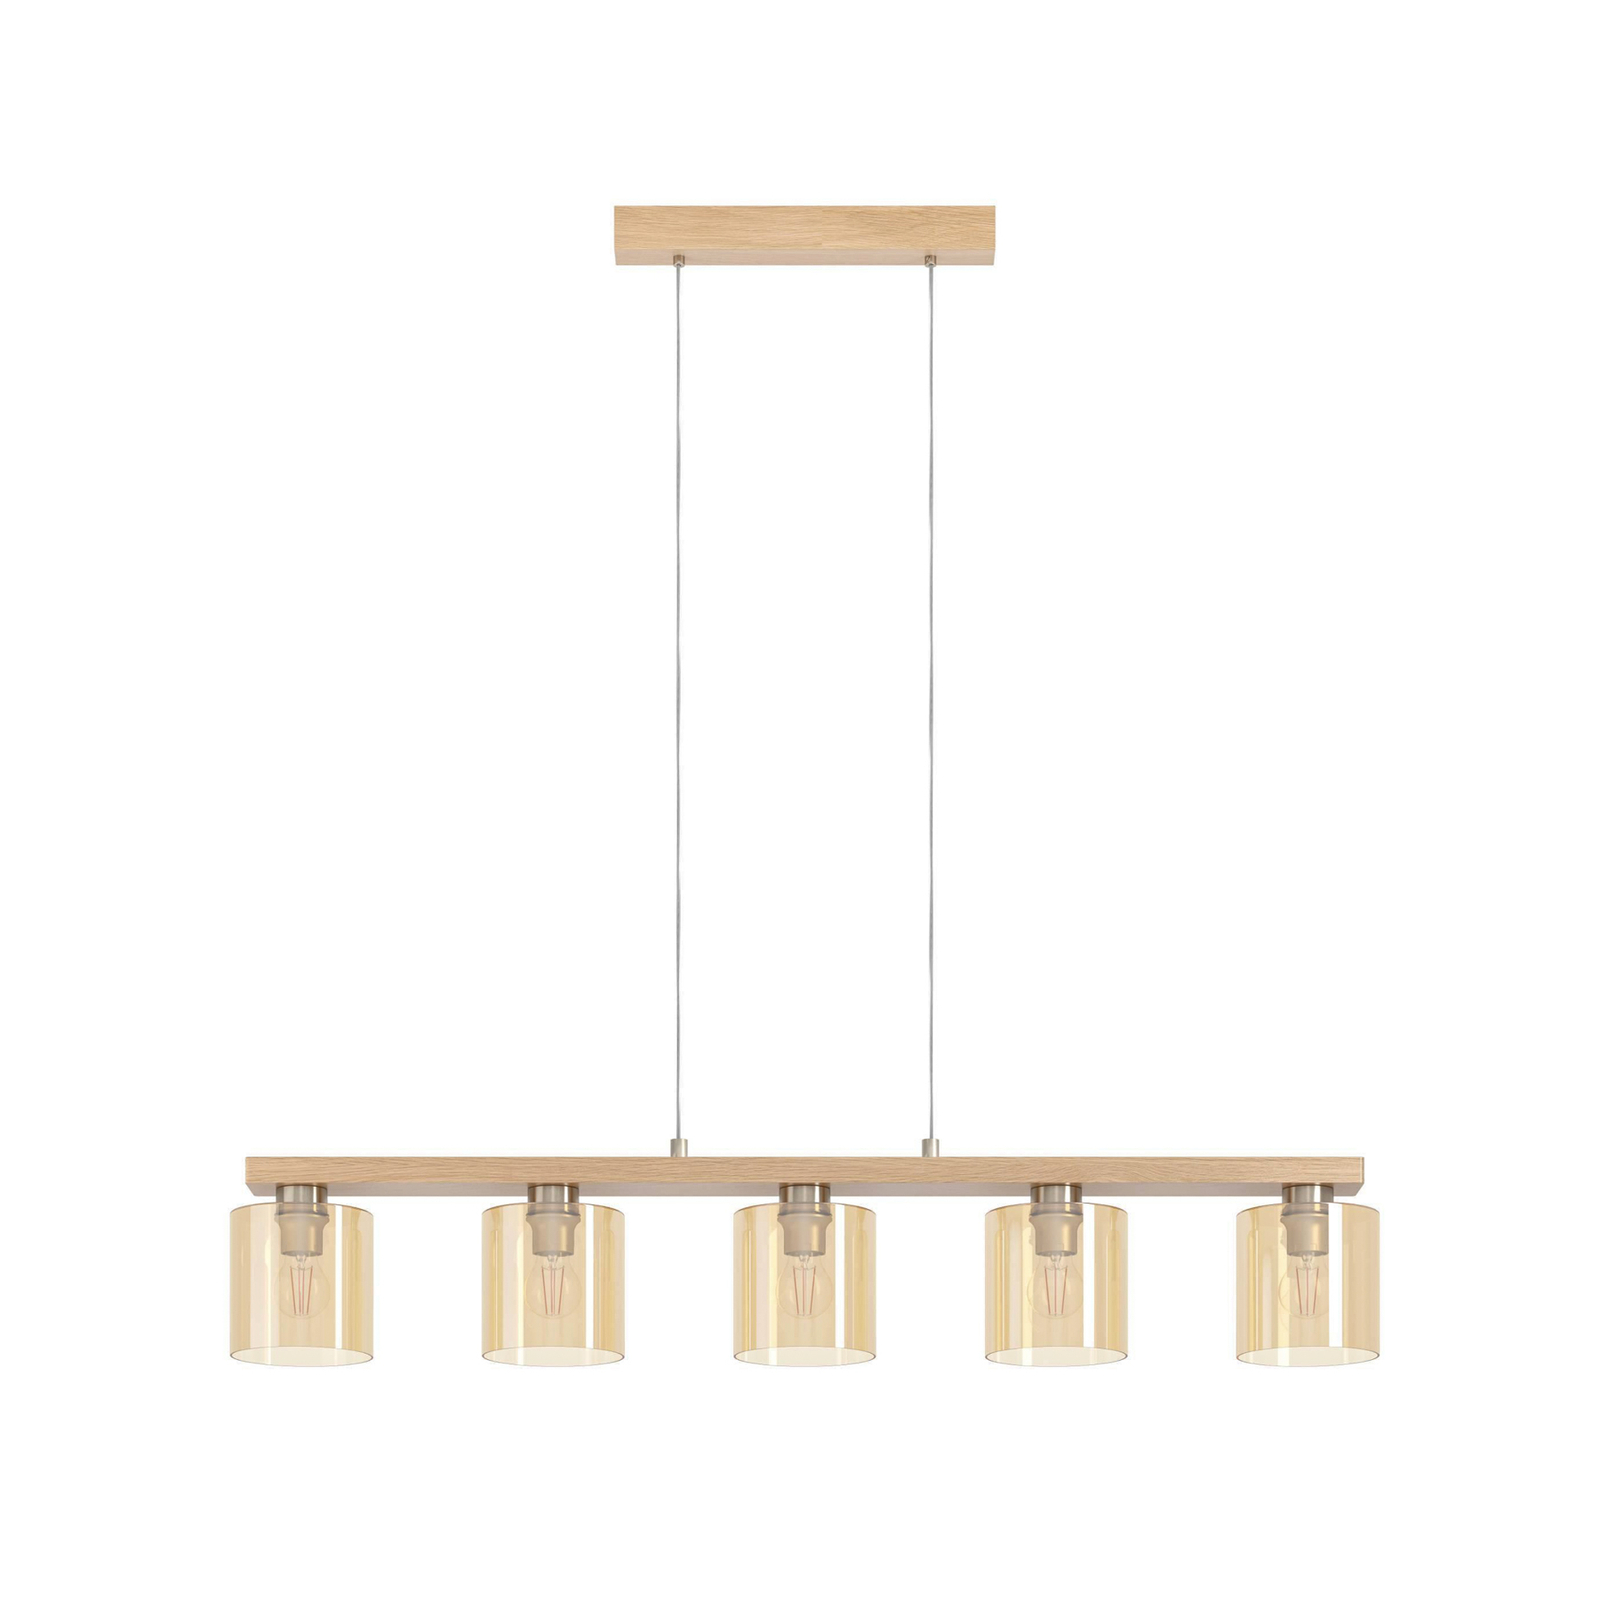 Castralvo lámpara colgante, longitud 115 cm, madera/ámbar, 5 luces, cristal